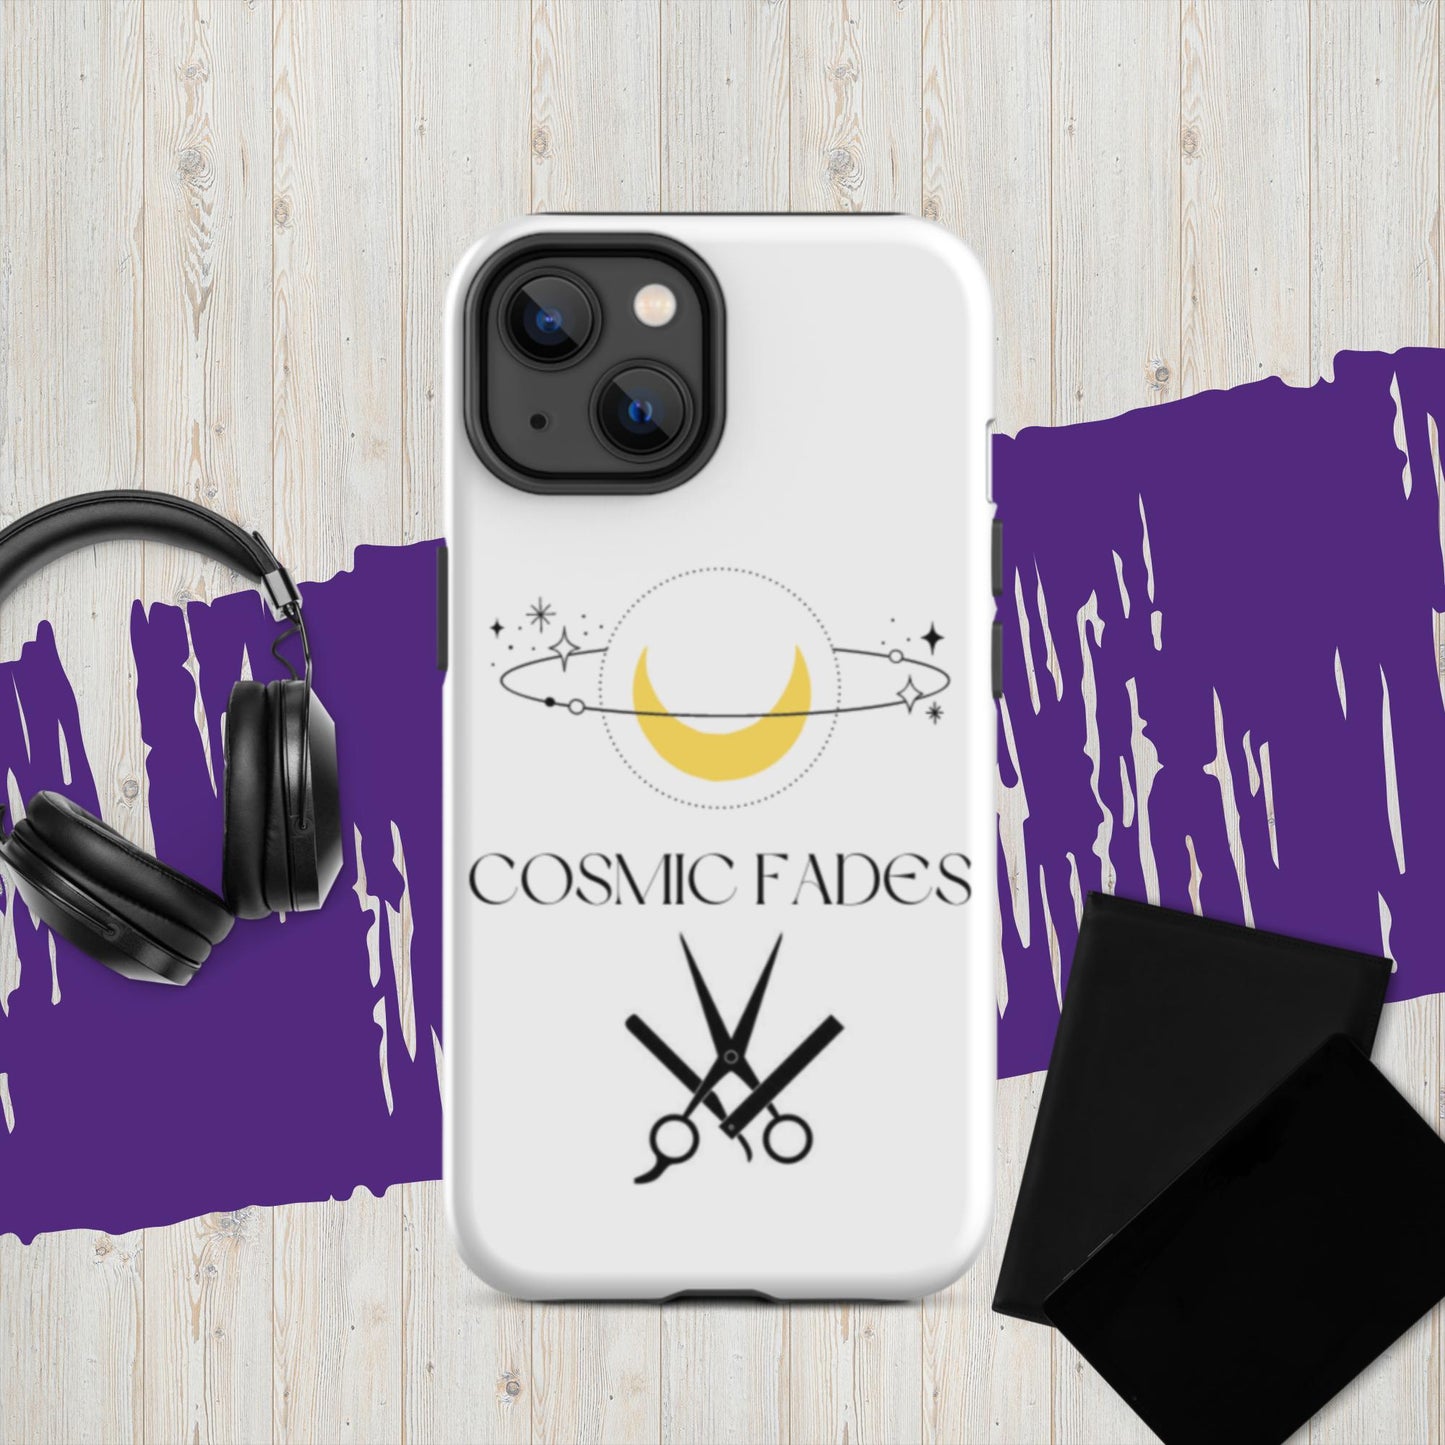 Tough Cosmic Fades iPhone case